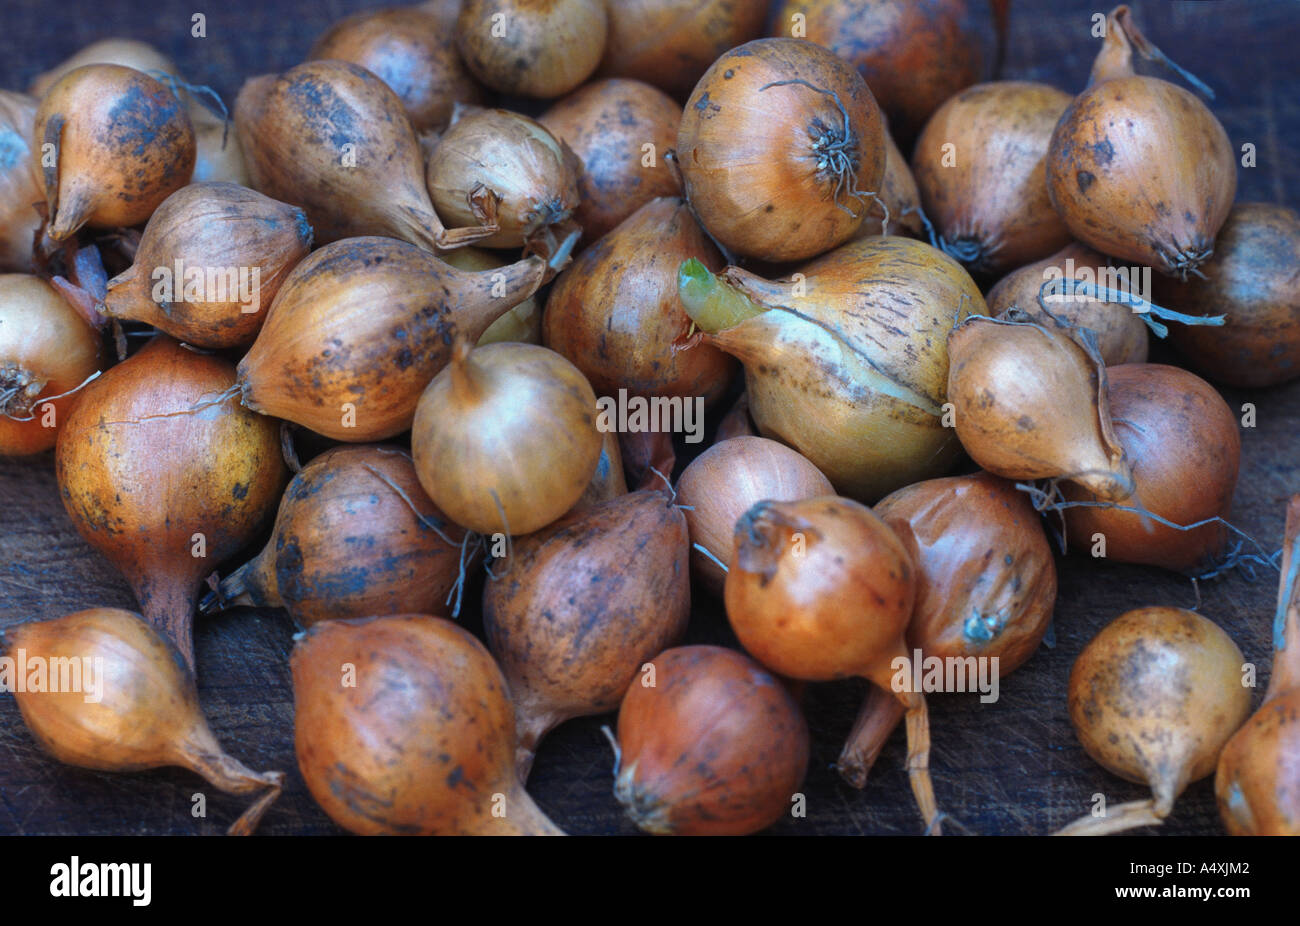 garden onion (alium cepa), some germinating Stock Photo